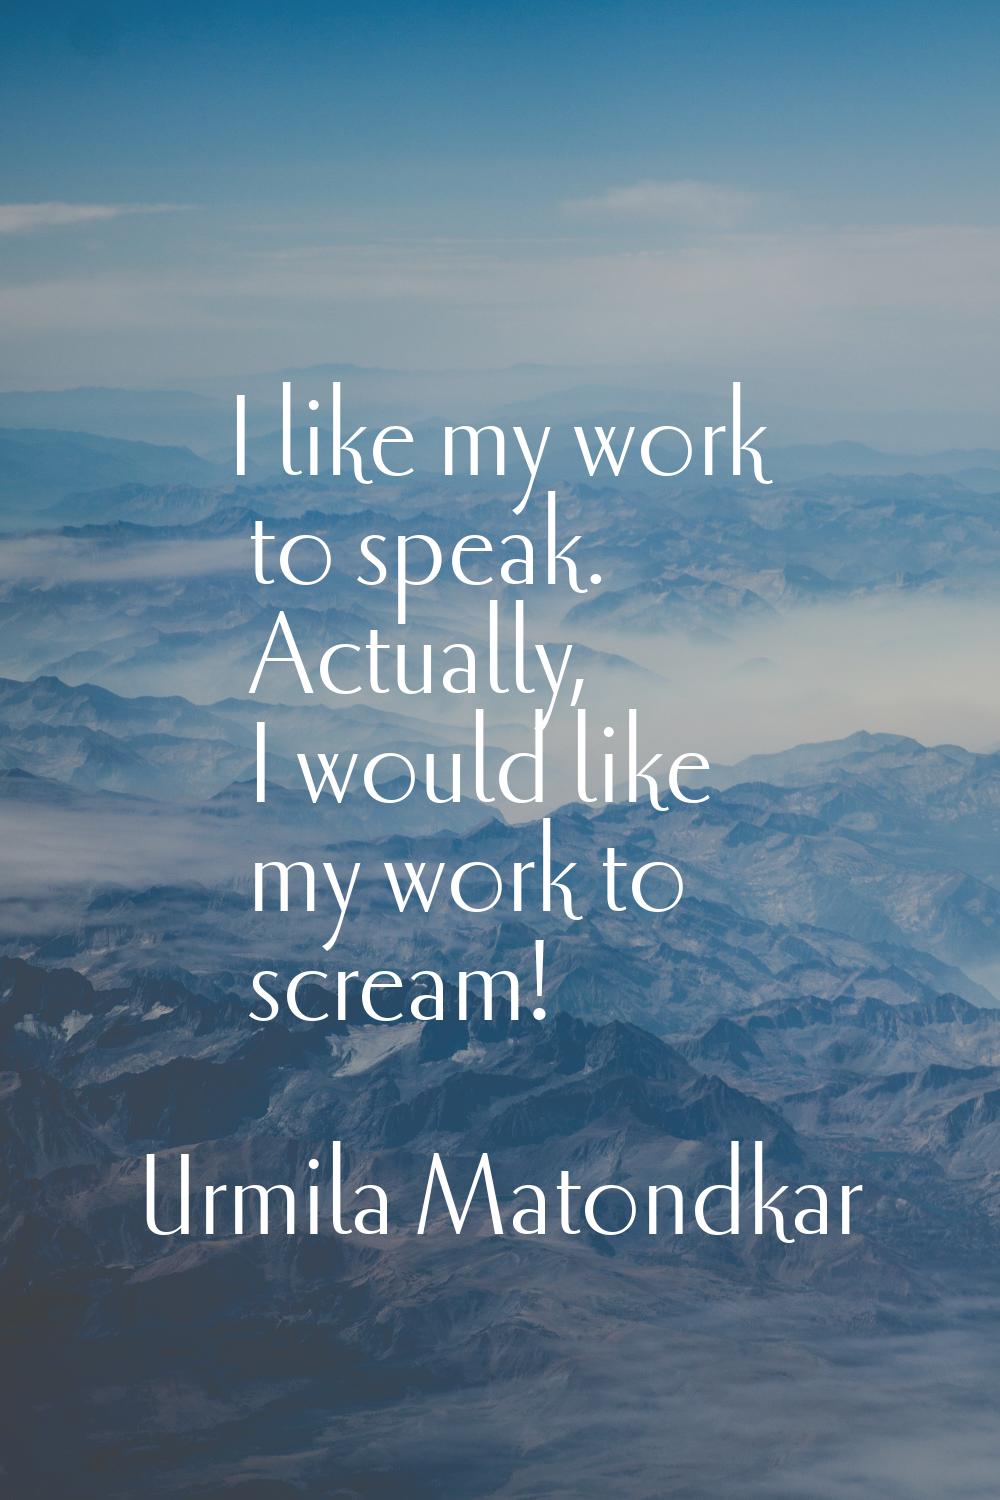 I like my work to speak. Actually, I would like my work to scream!